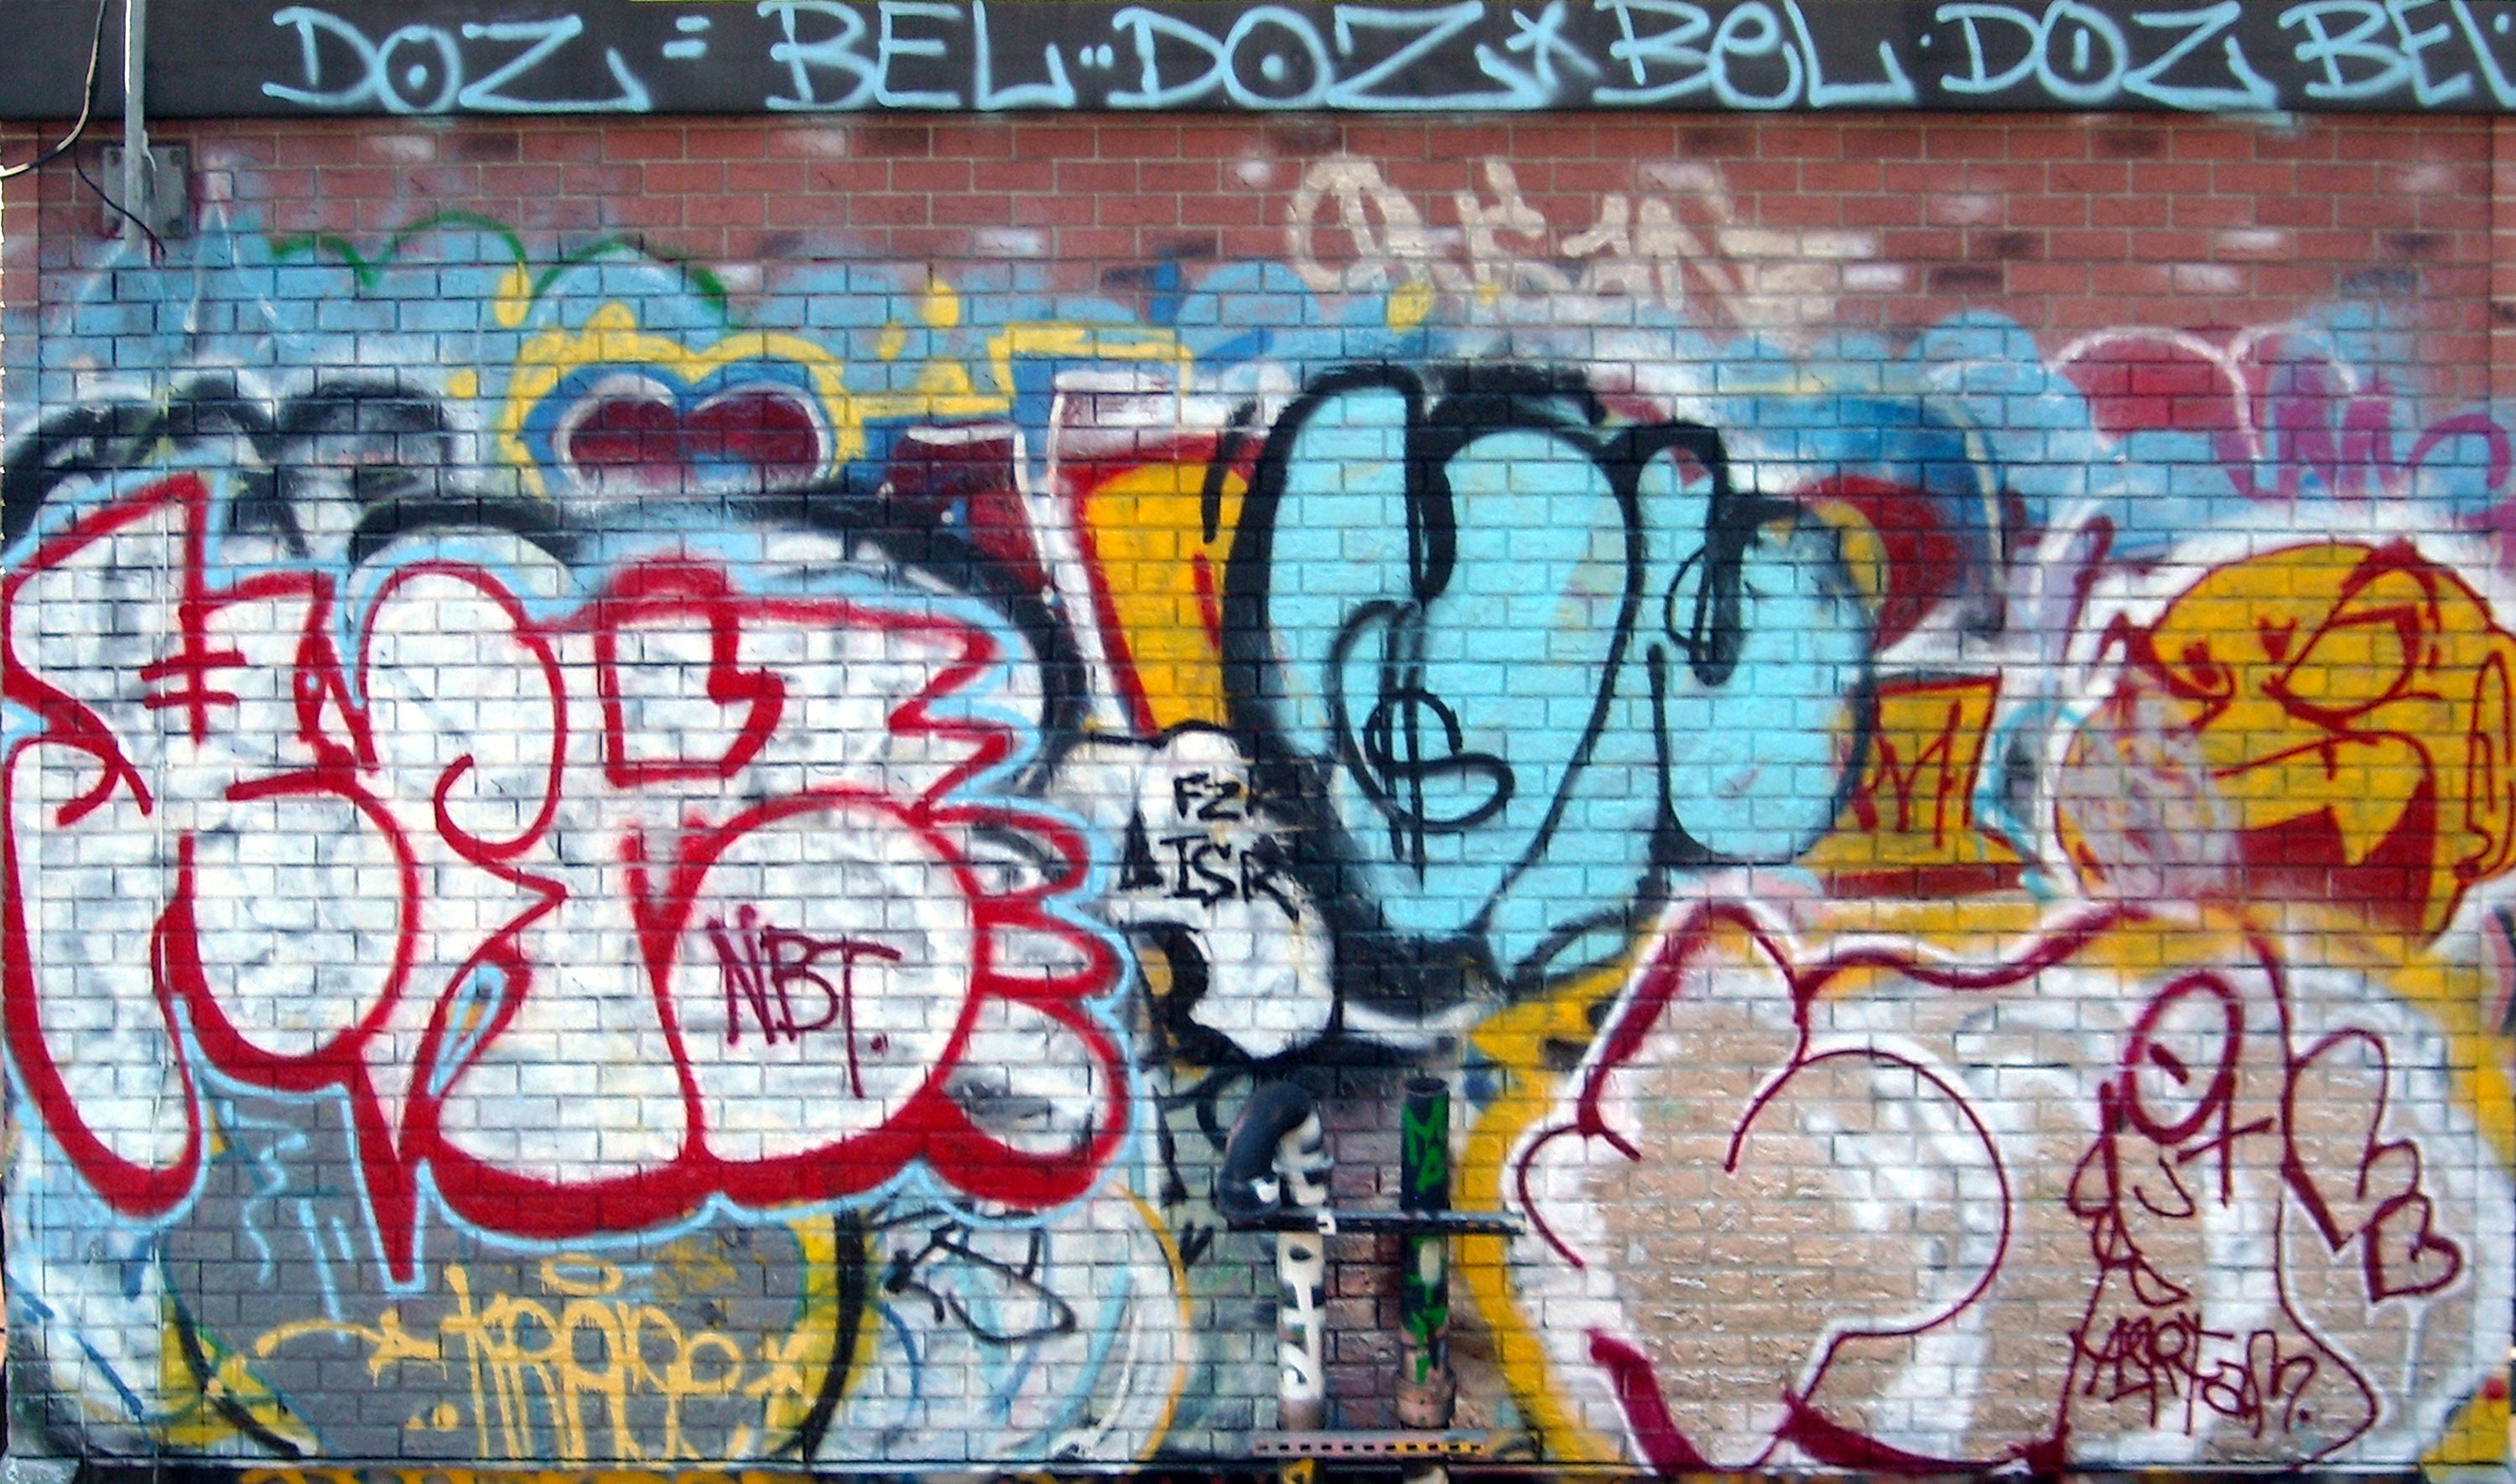 Graffiti Art In Urban Tunnel London England Street Art Tagging